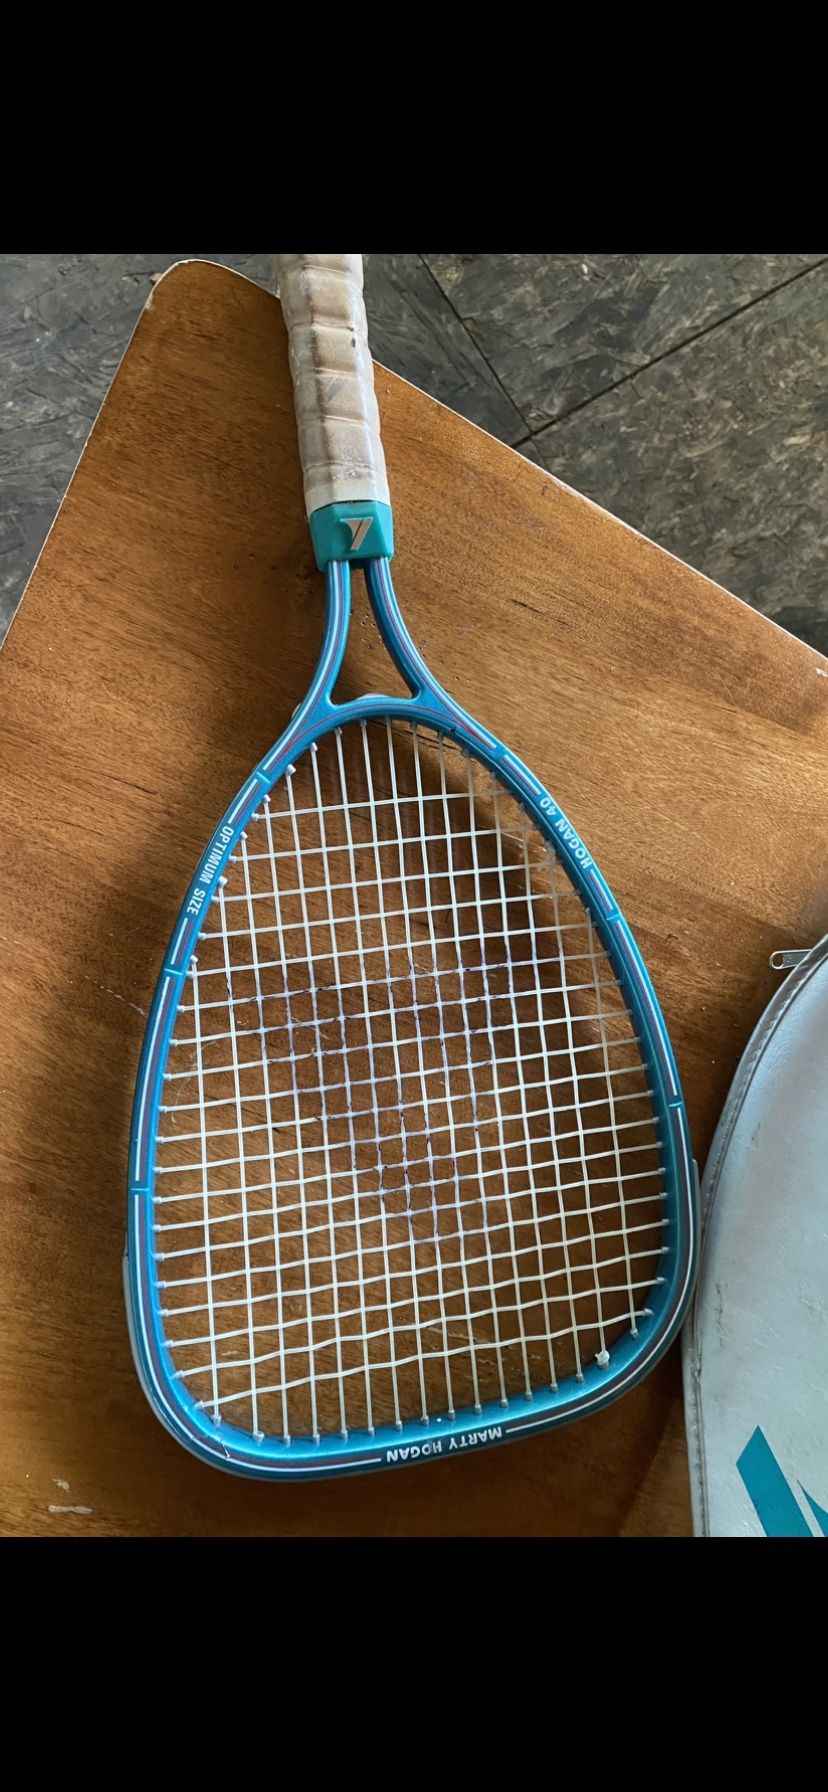 Marty Hogan 40 Teal Tennis Racquet Silver Cover Optimum Size Pro Kennex Racket